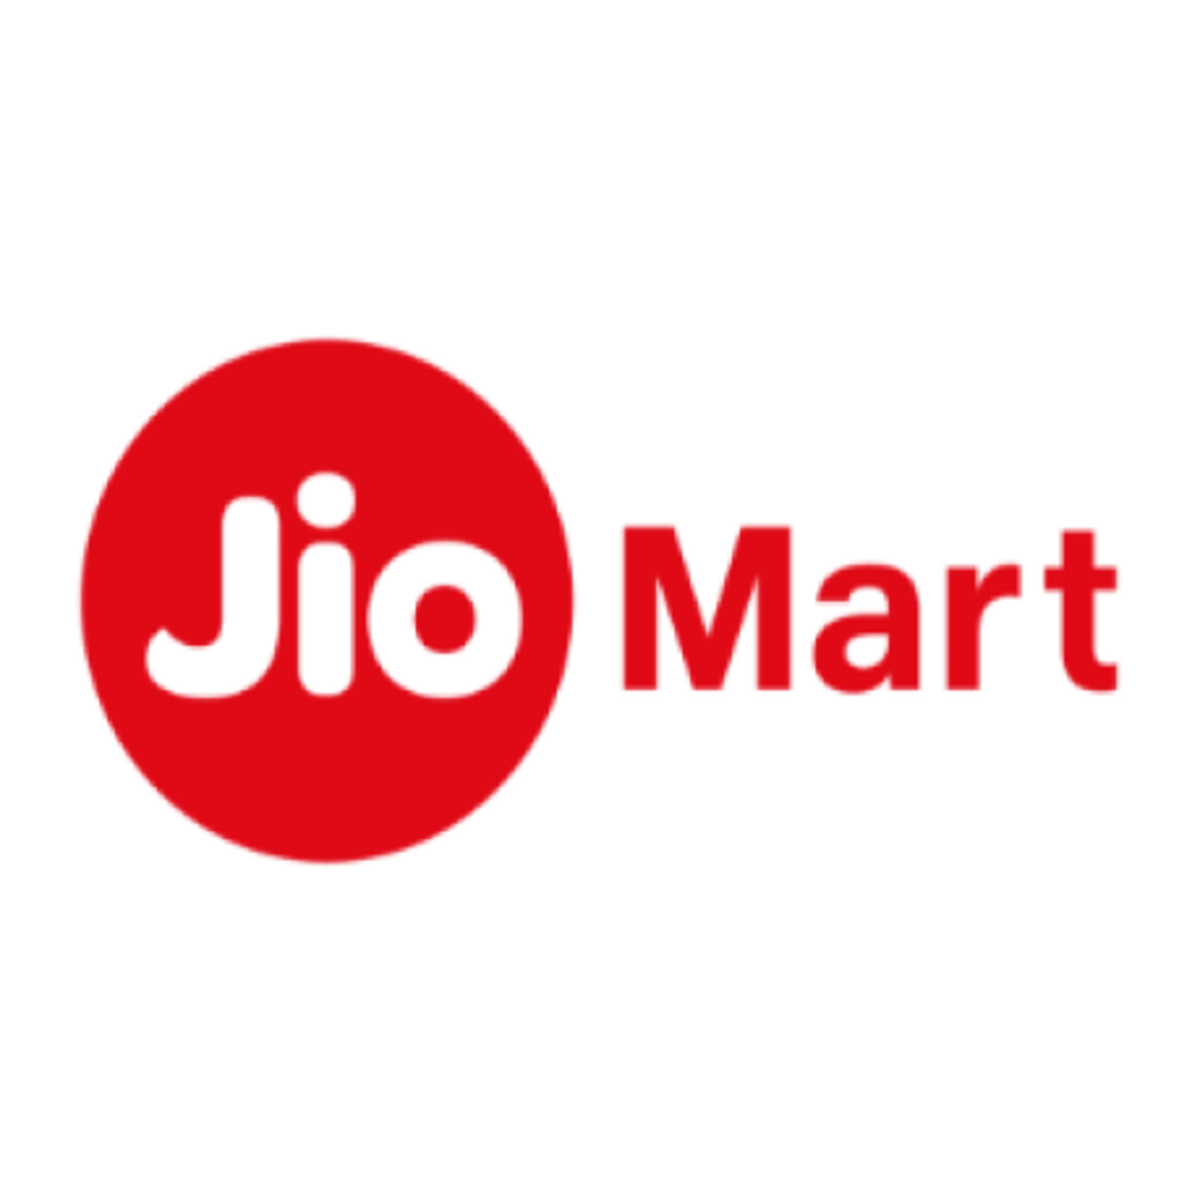 Jiomart Logo